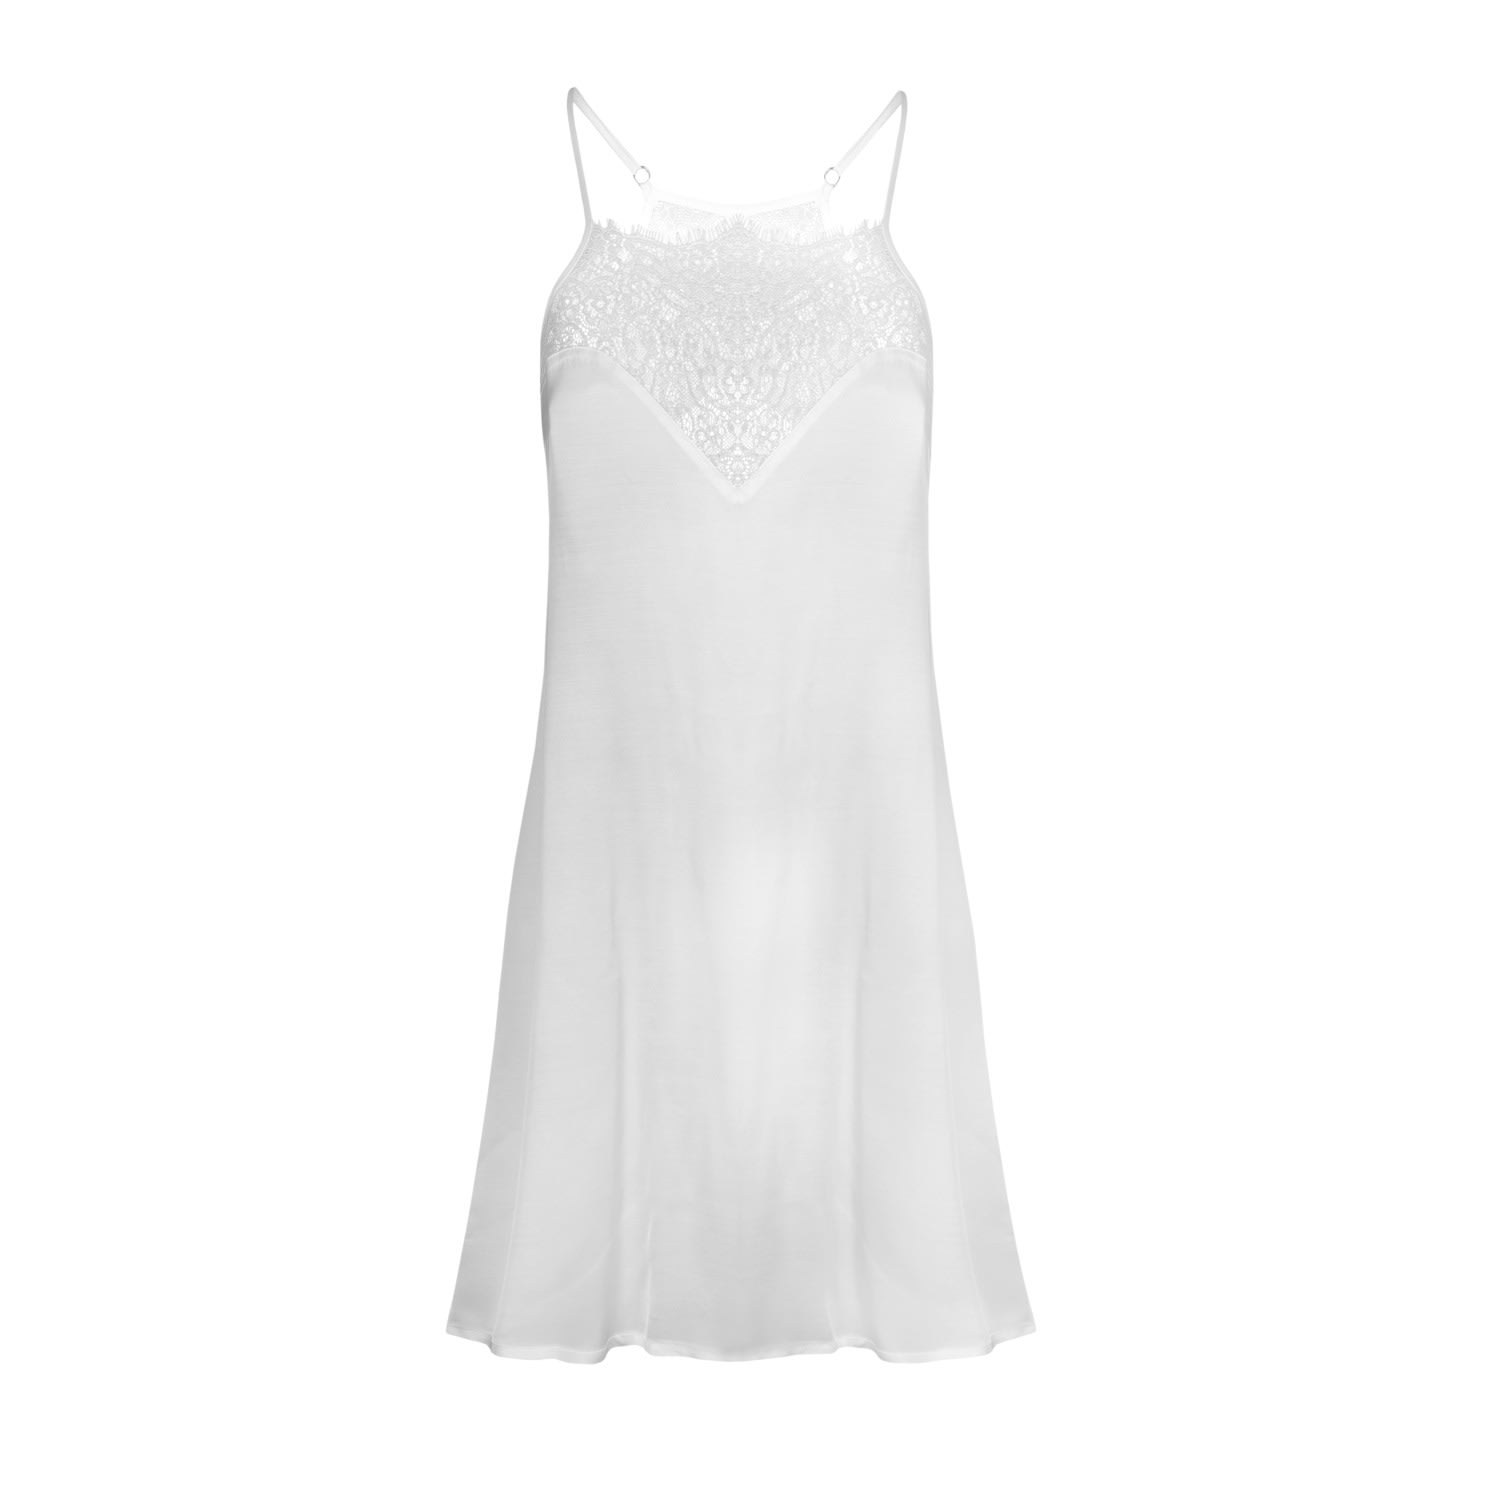 Women’s Chemise Nightdress - Viscose Satin & Delicate Lace - White Medium Oh!Zuza Night & Day